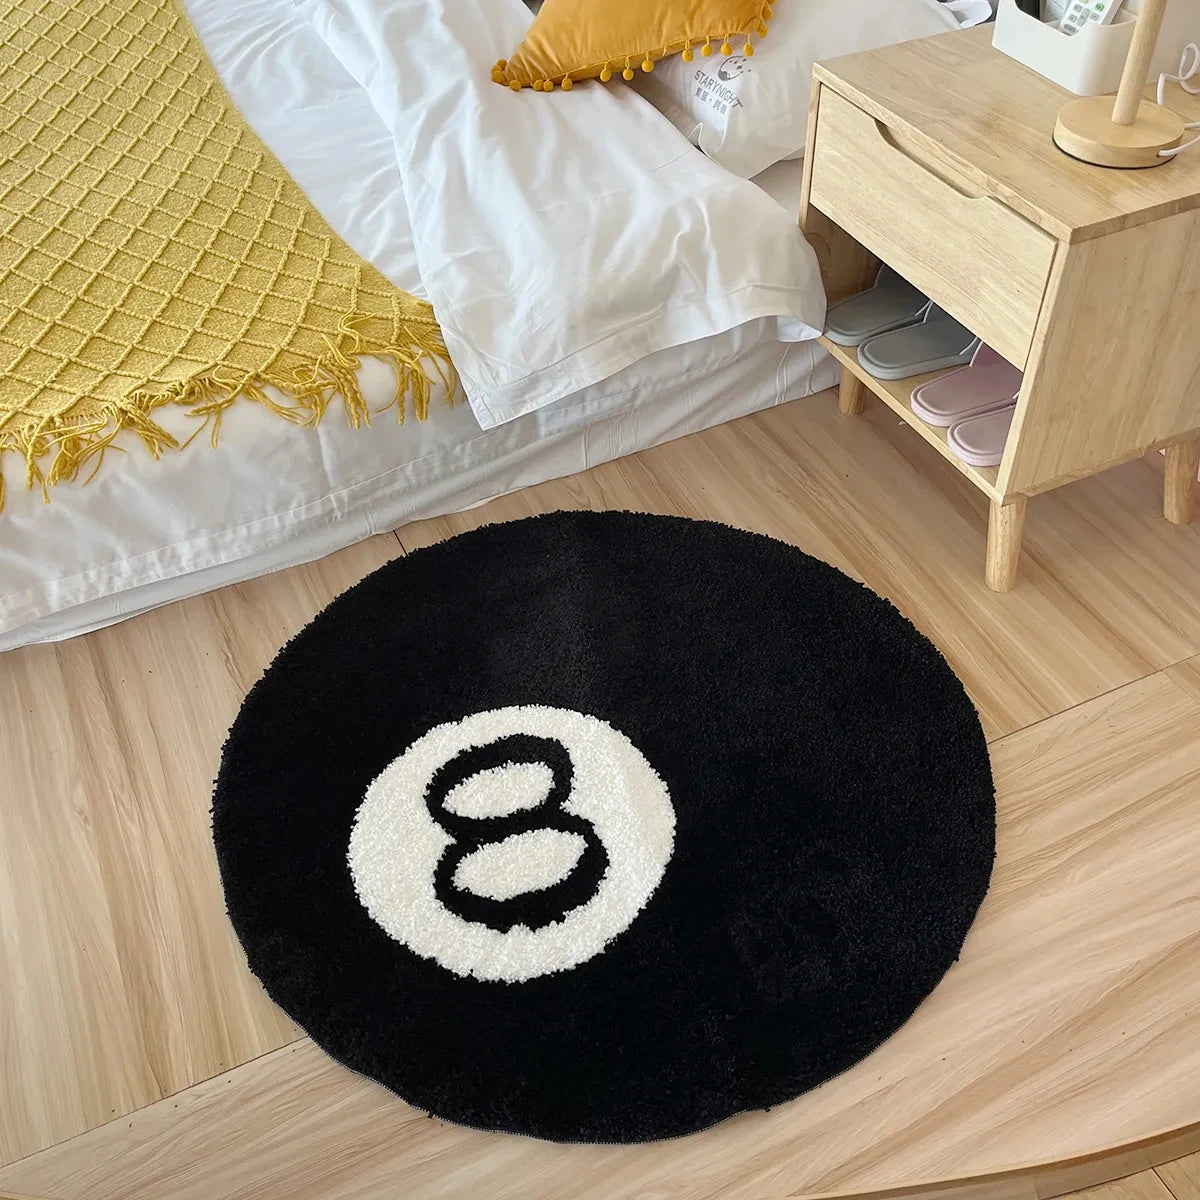 8 Ball Rug Black round Rug Carpet Non-Slip Flocking Floor Area Rug Bath Mat for Living Room Bathroom Decor Room Home Decor